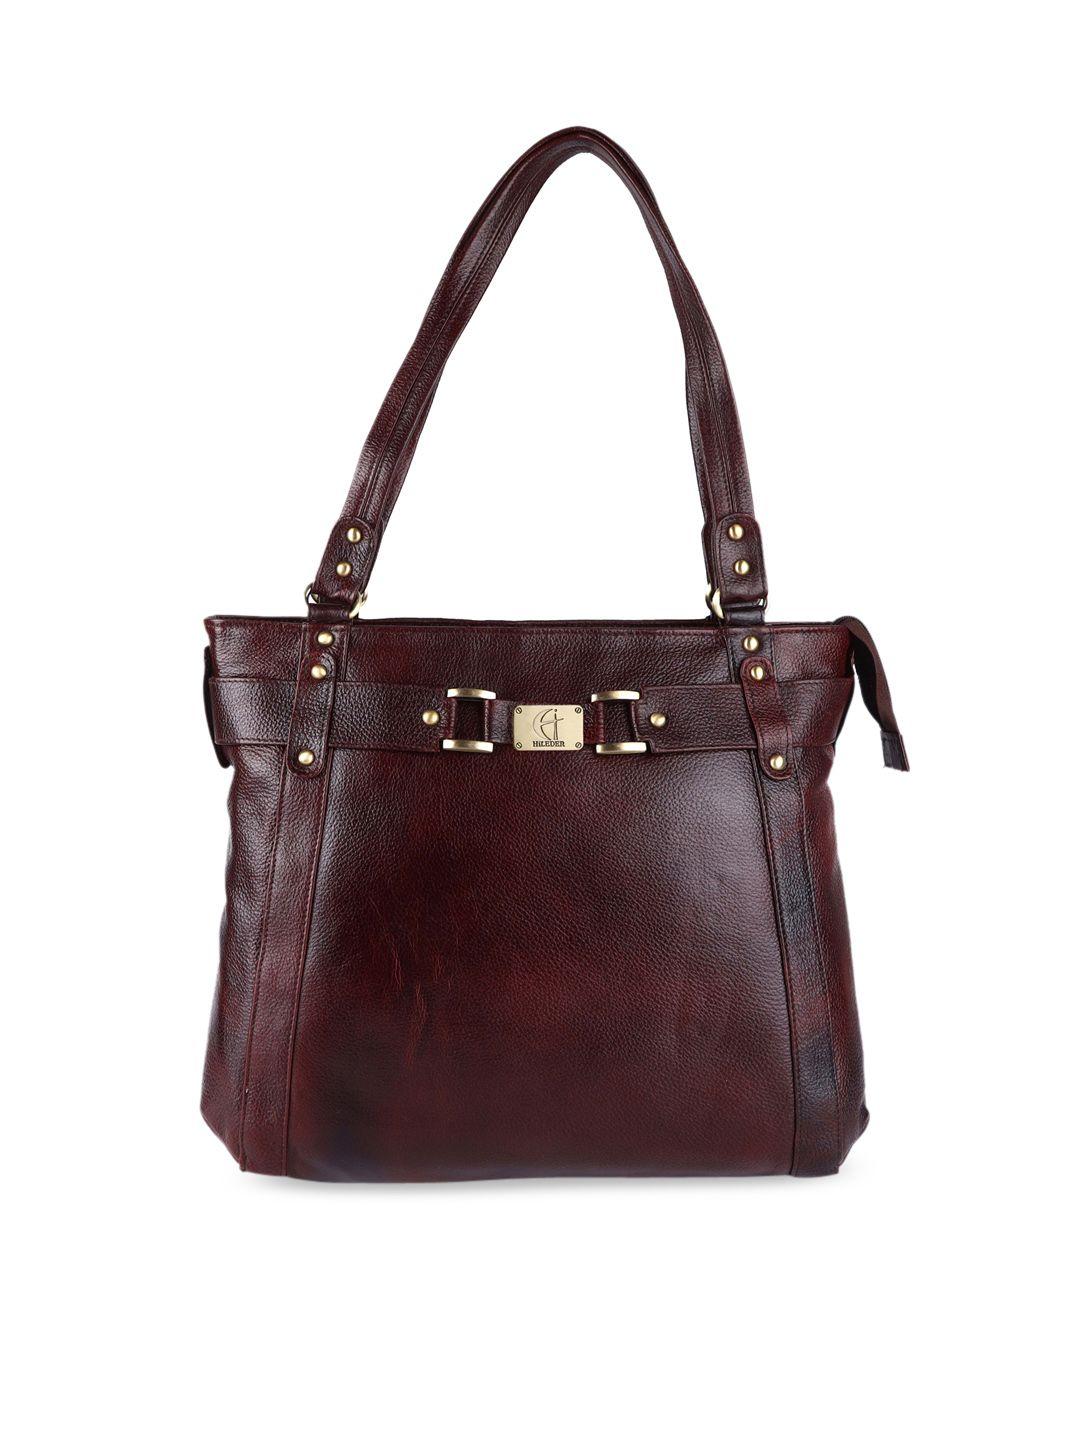 hileder brown leather structured handheld bag with fringed